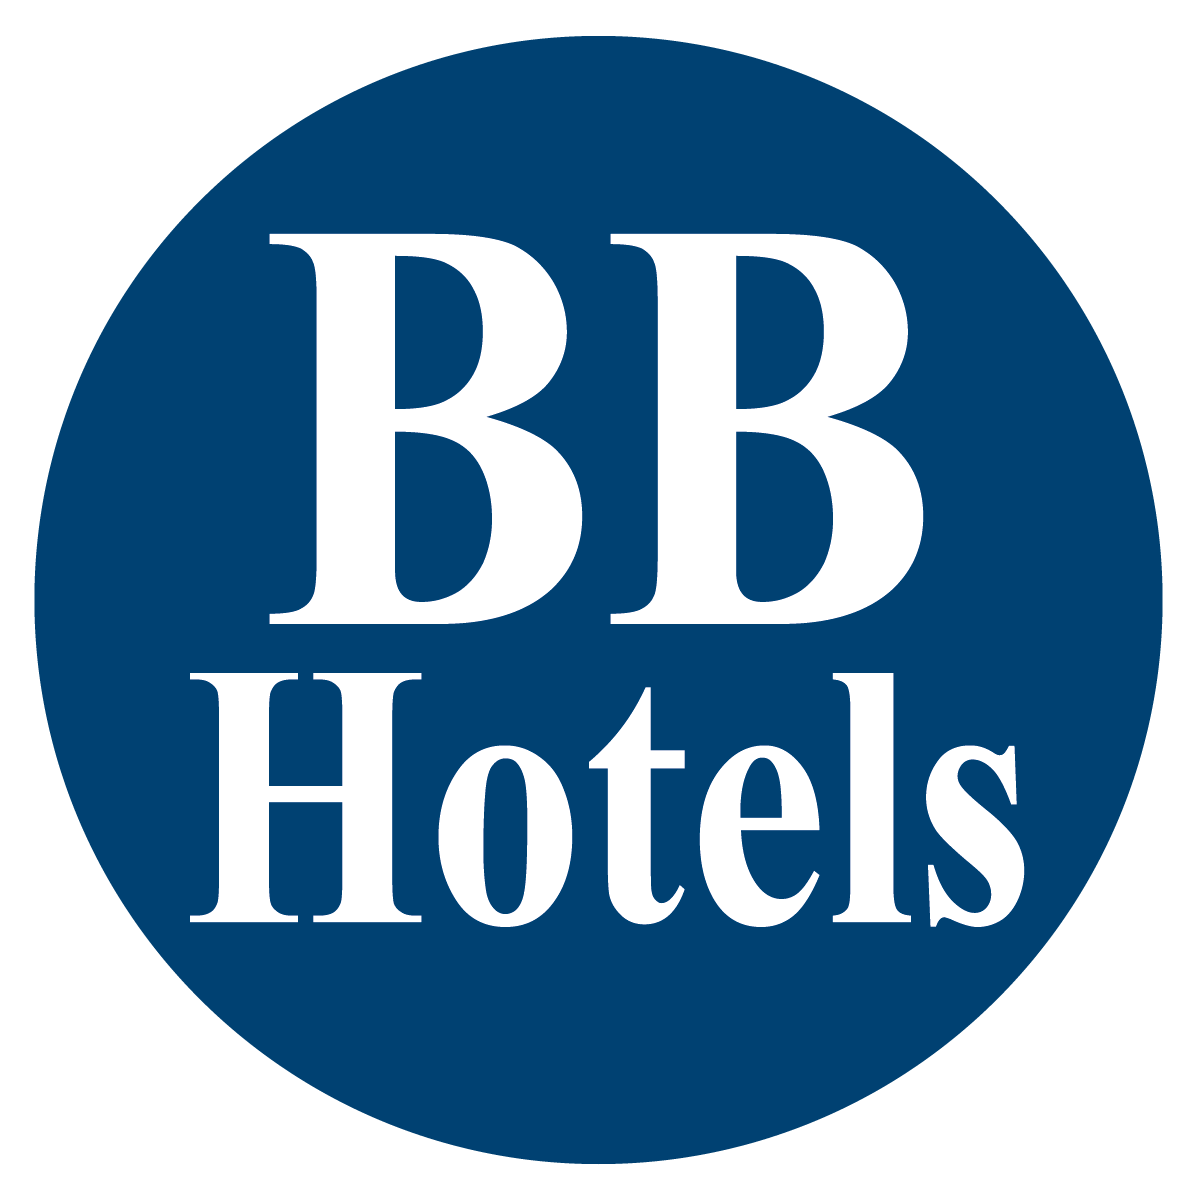 BB-Hotels